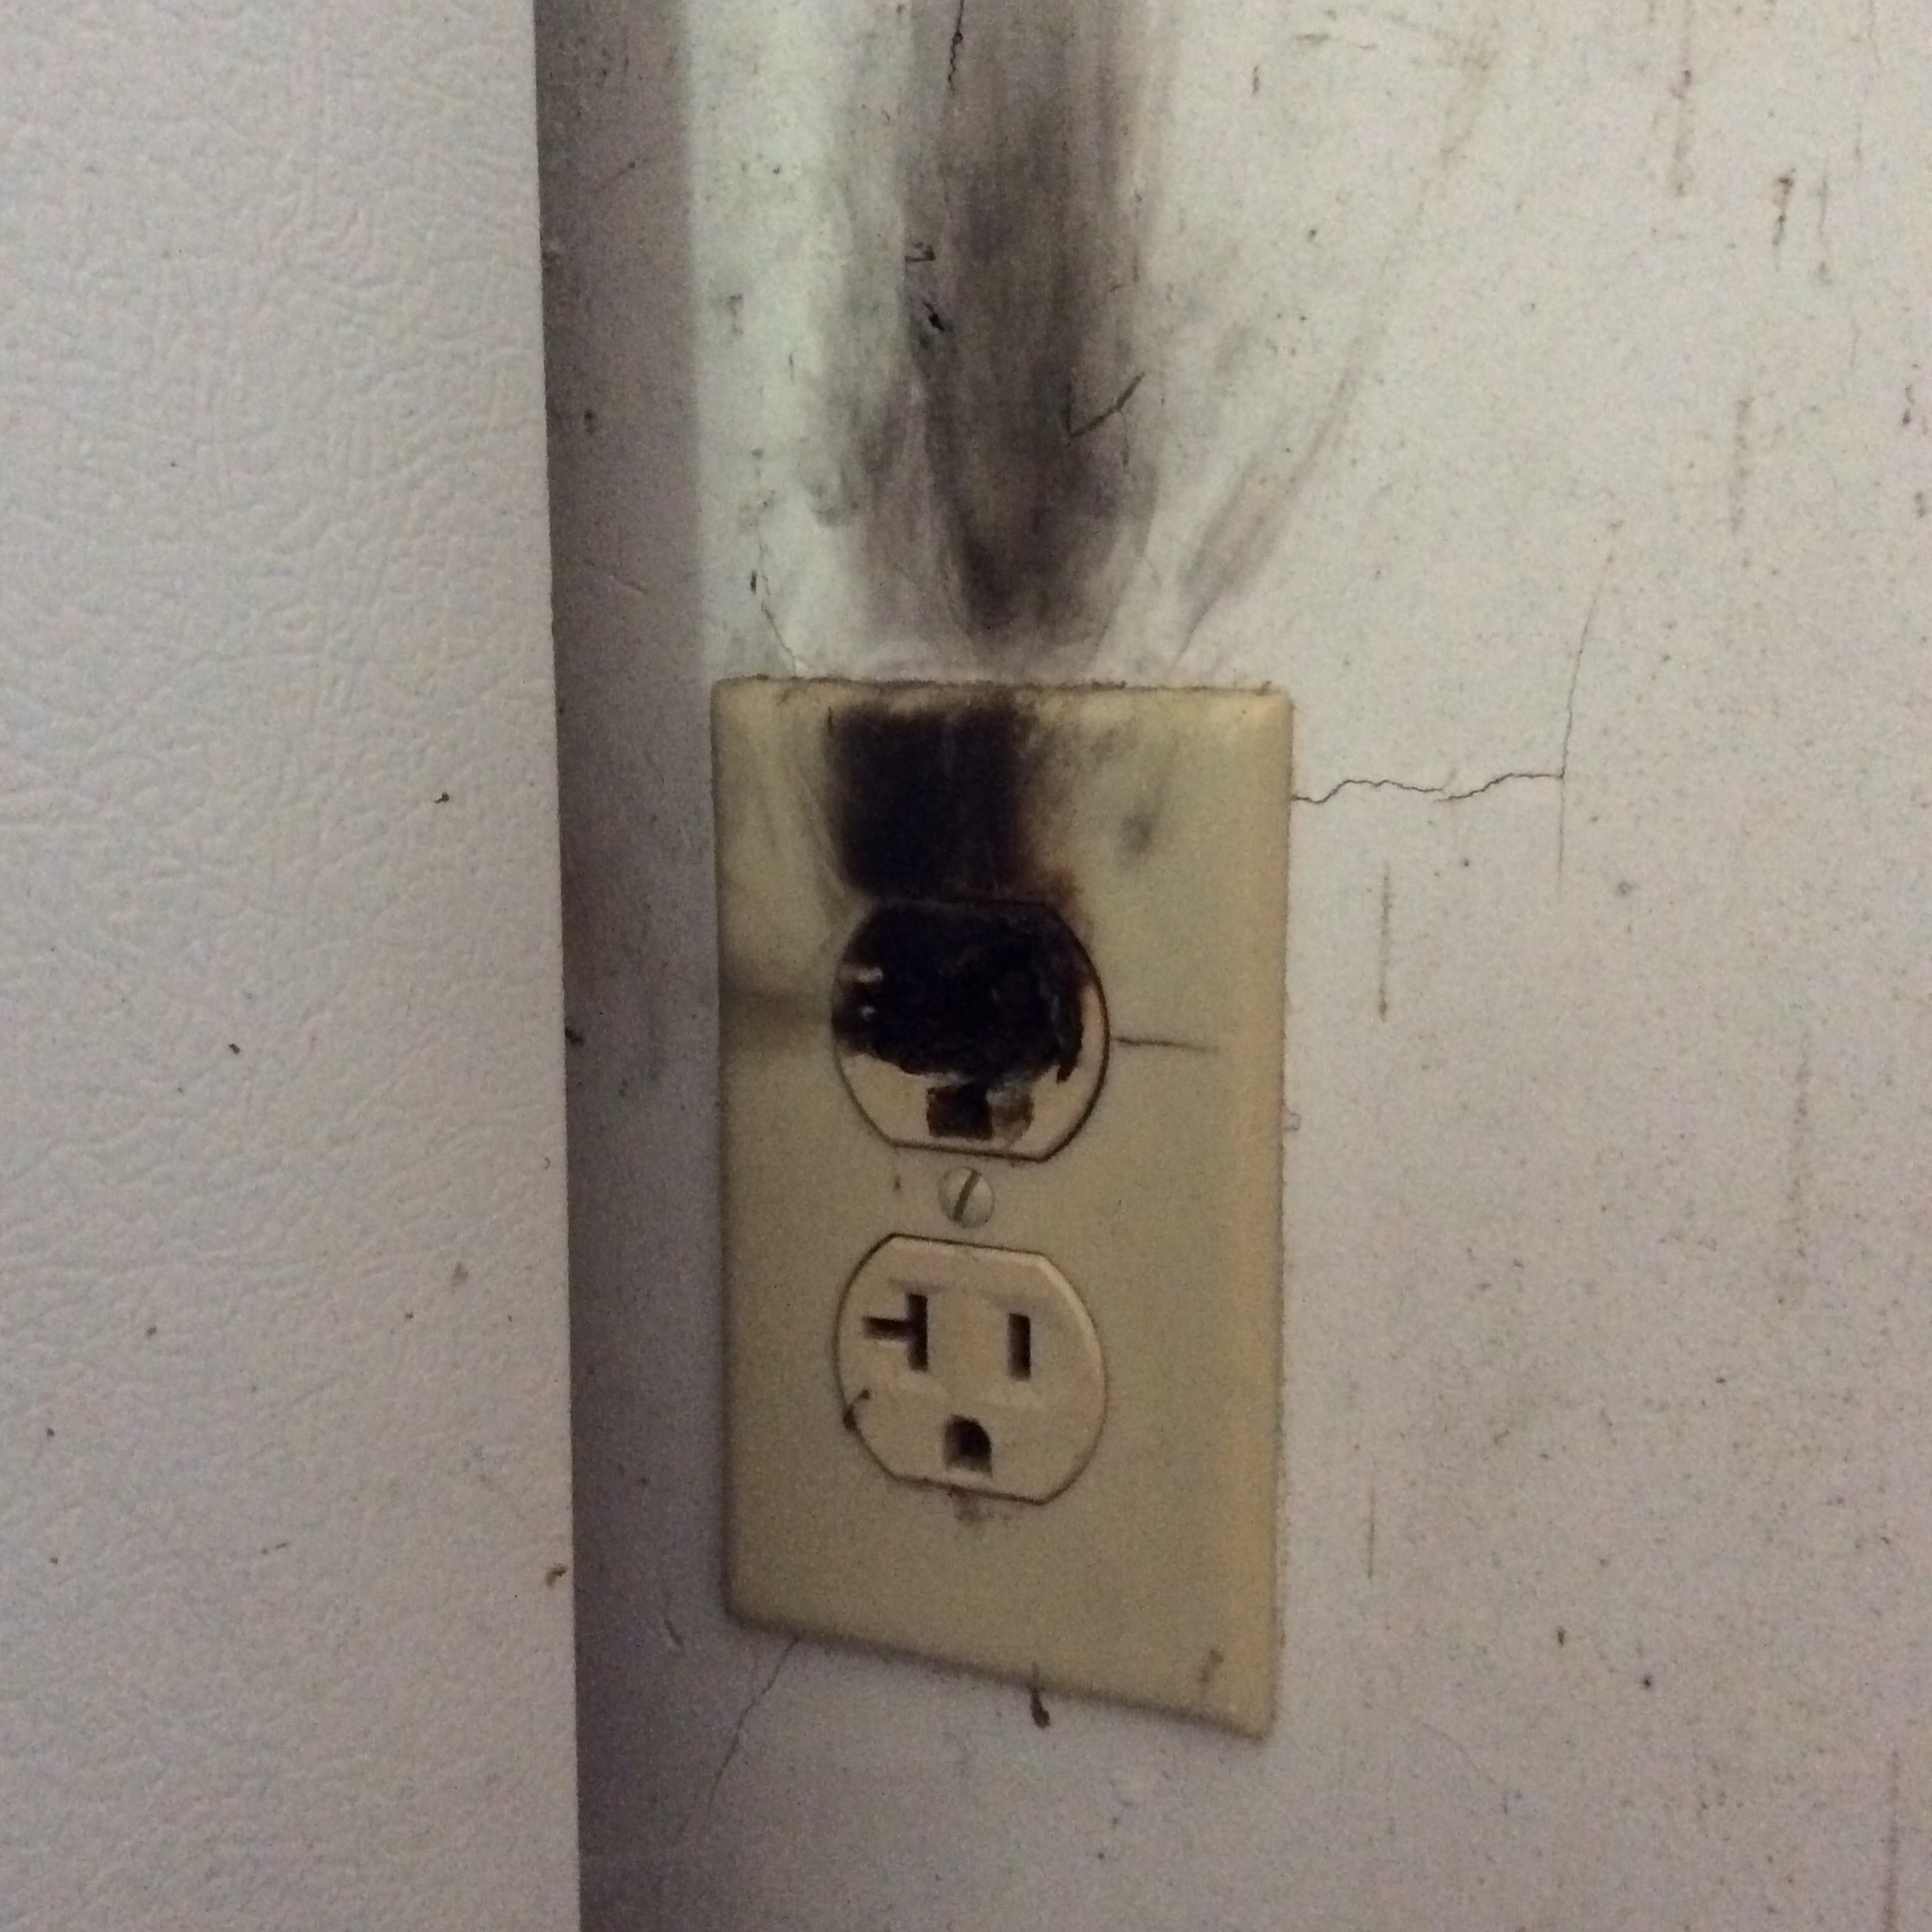 A burned receptacle.